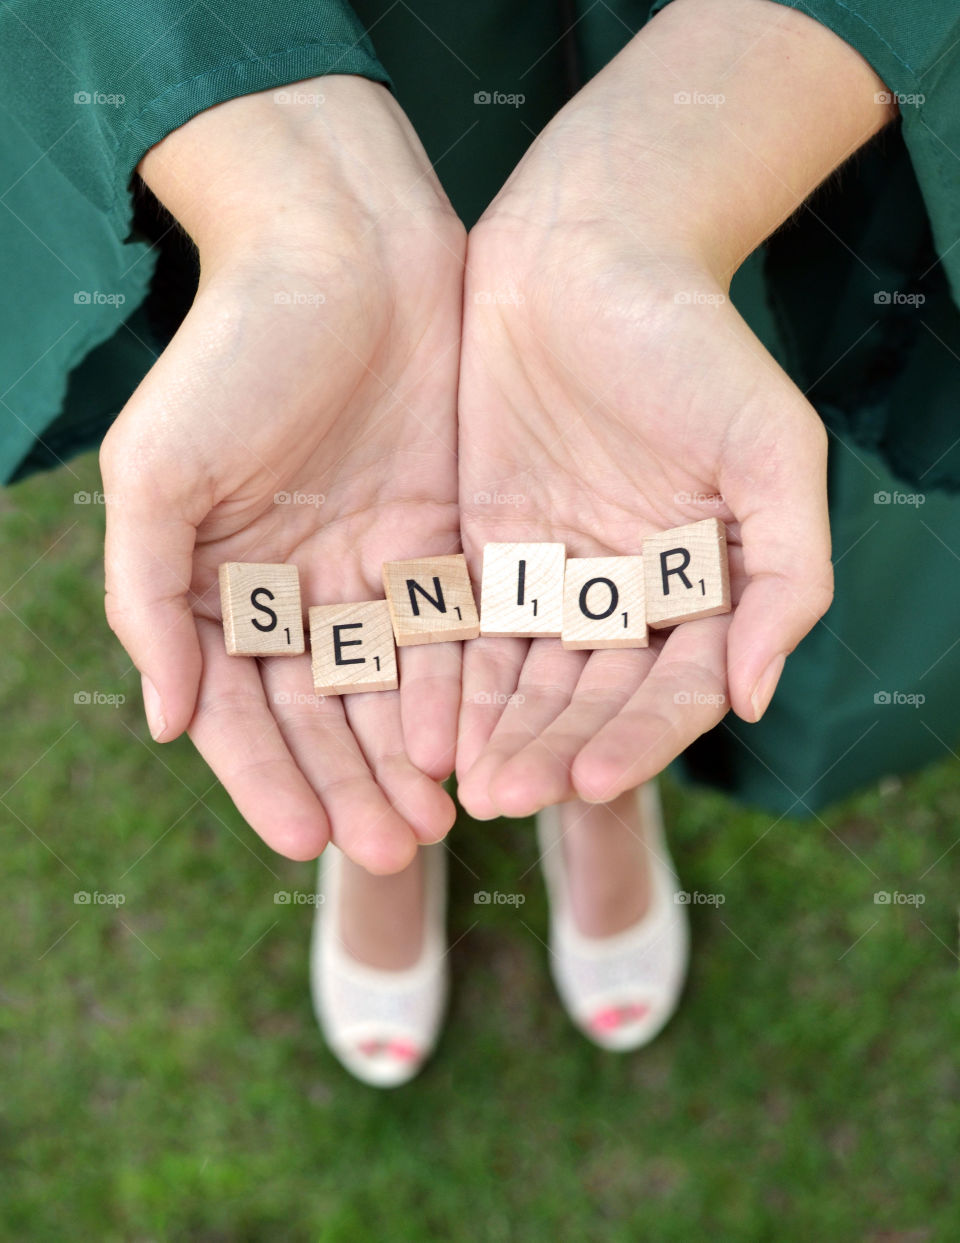 Senior!. Senior spelled out in scrabble tiles in someone's hand 